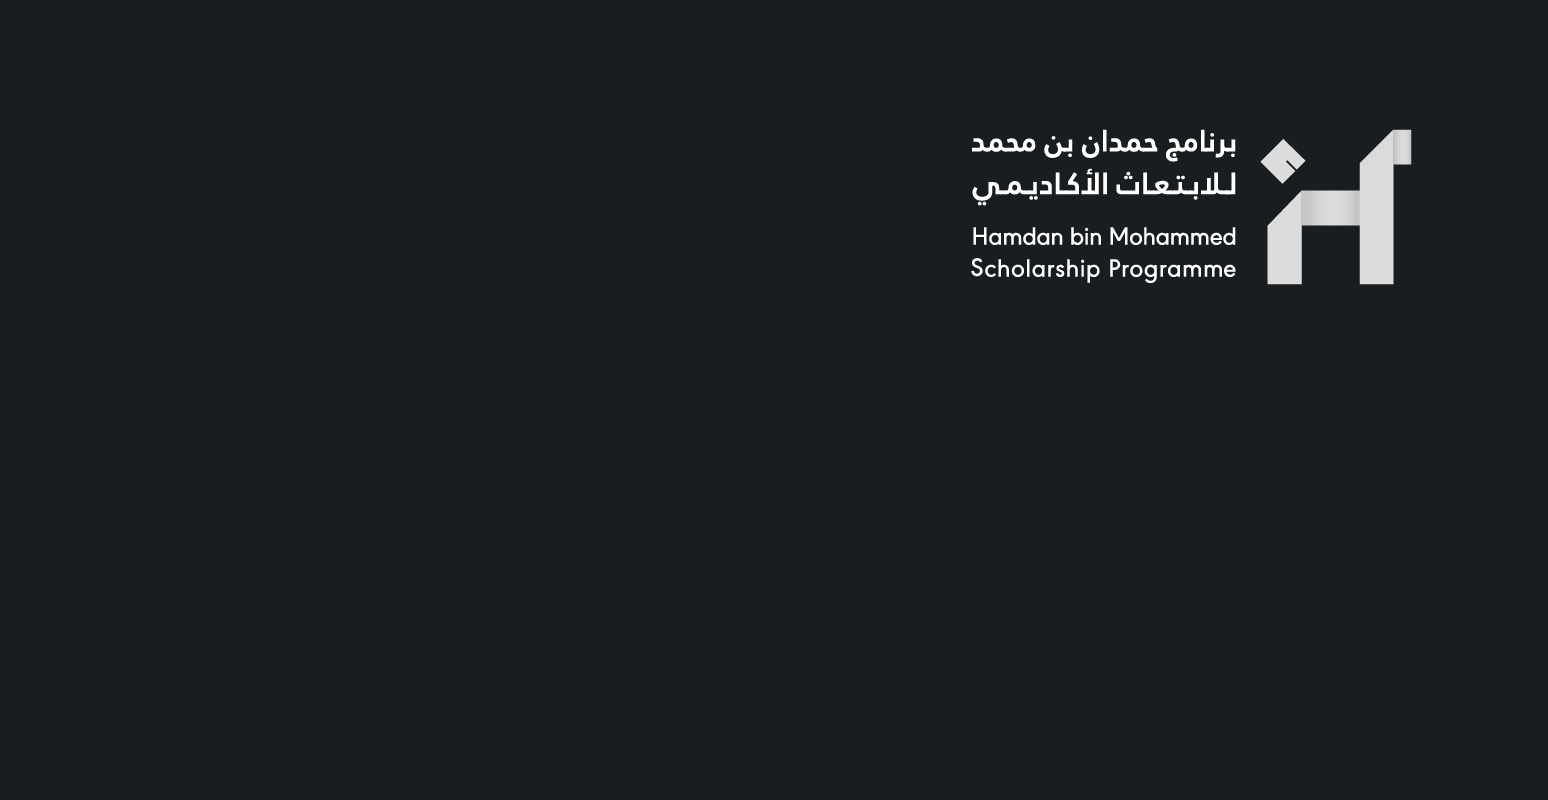 Hamdan bin Mohammed Scholarship Programme